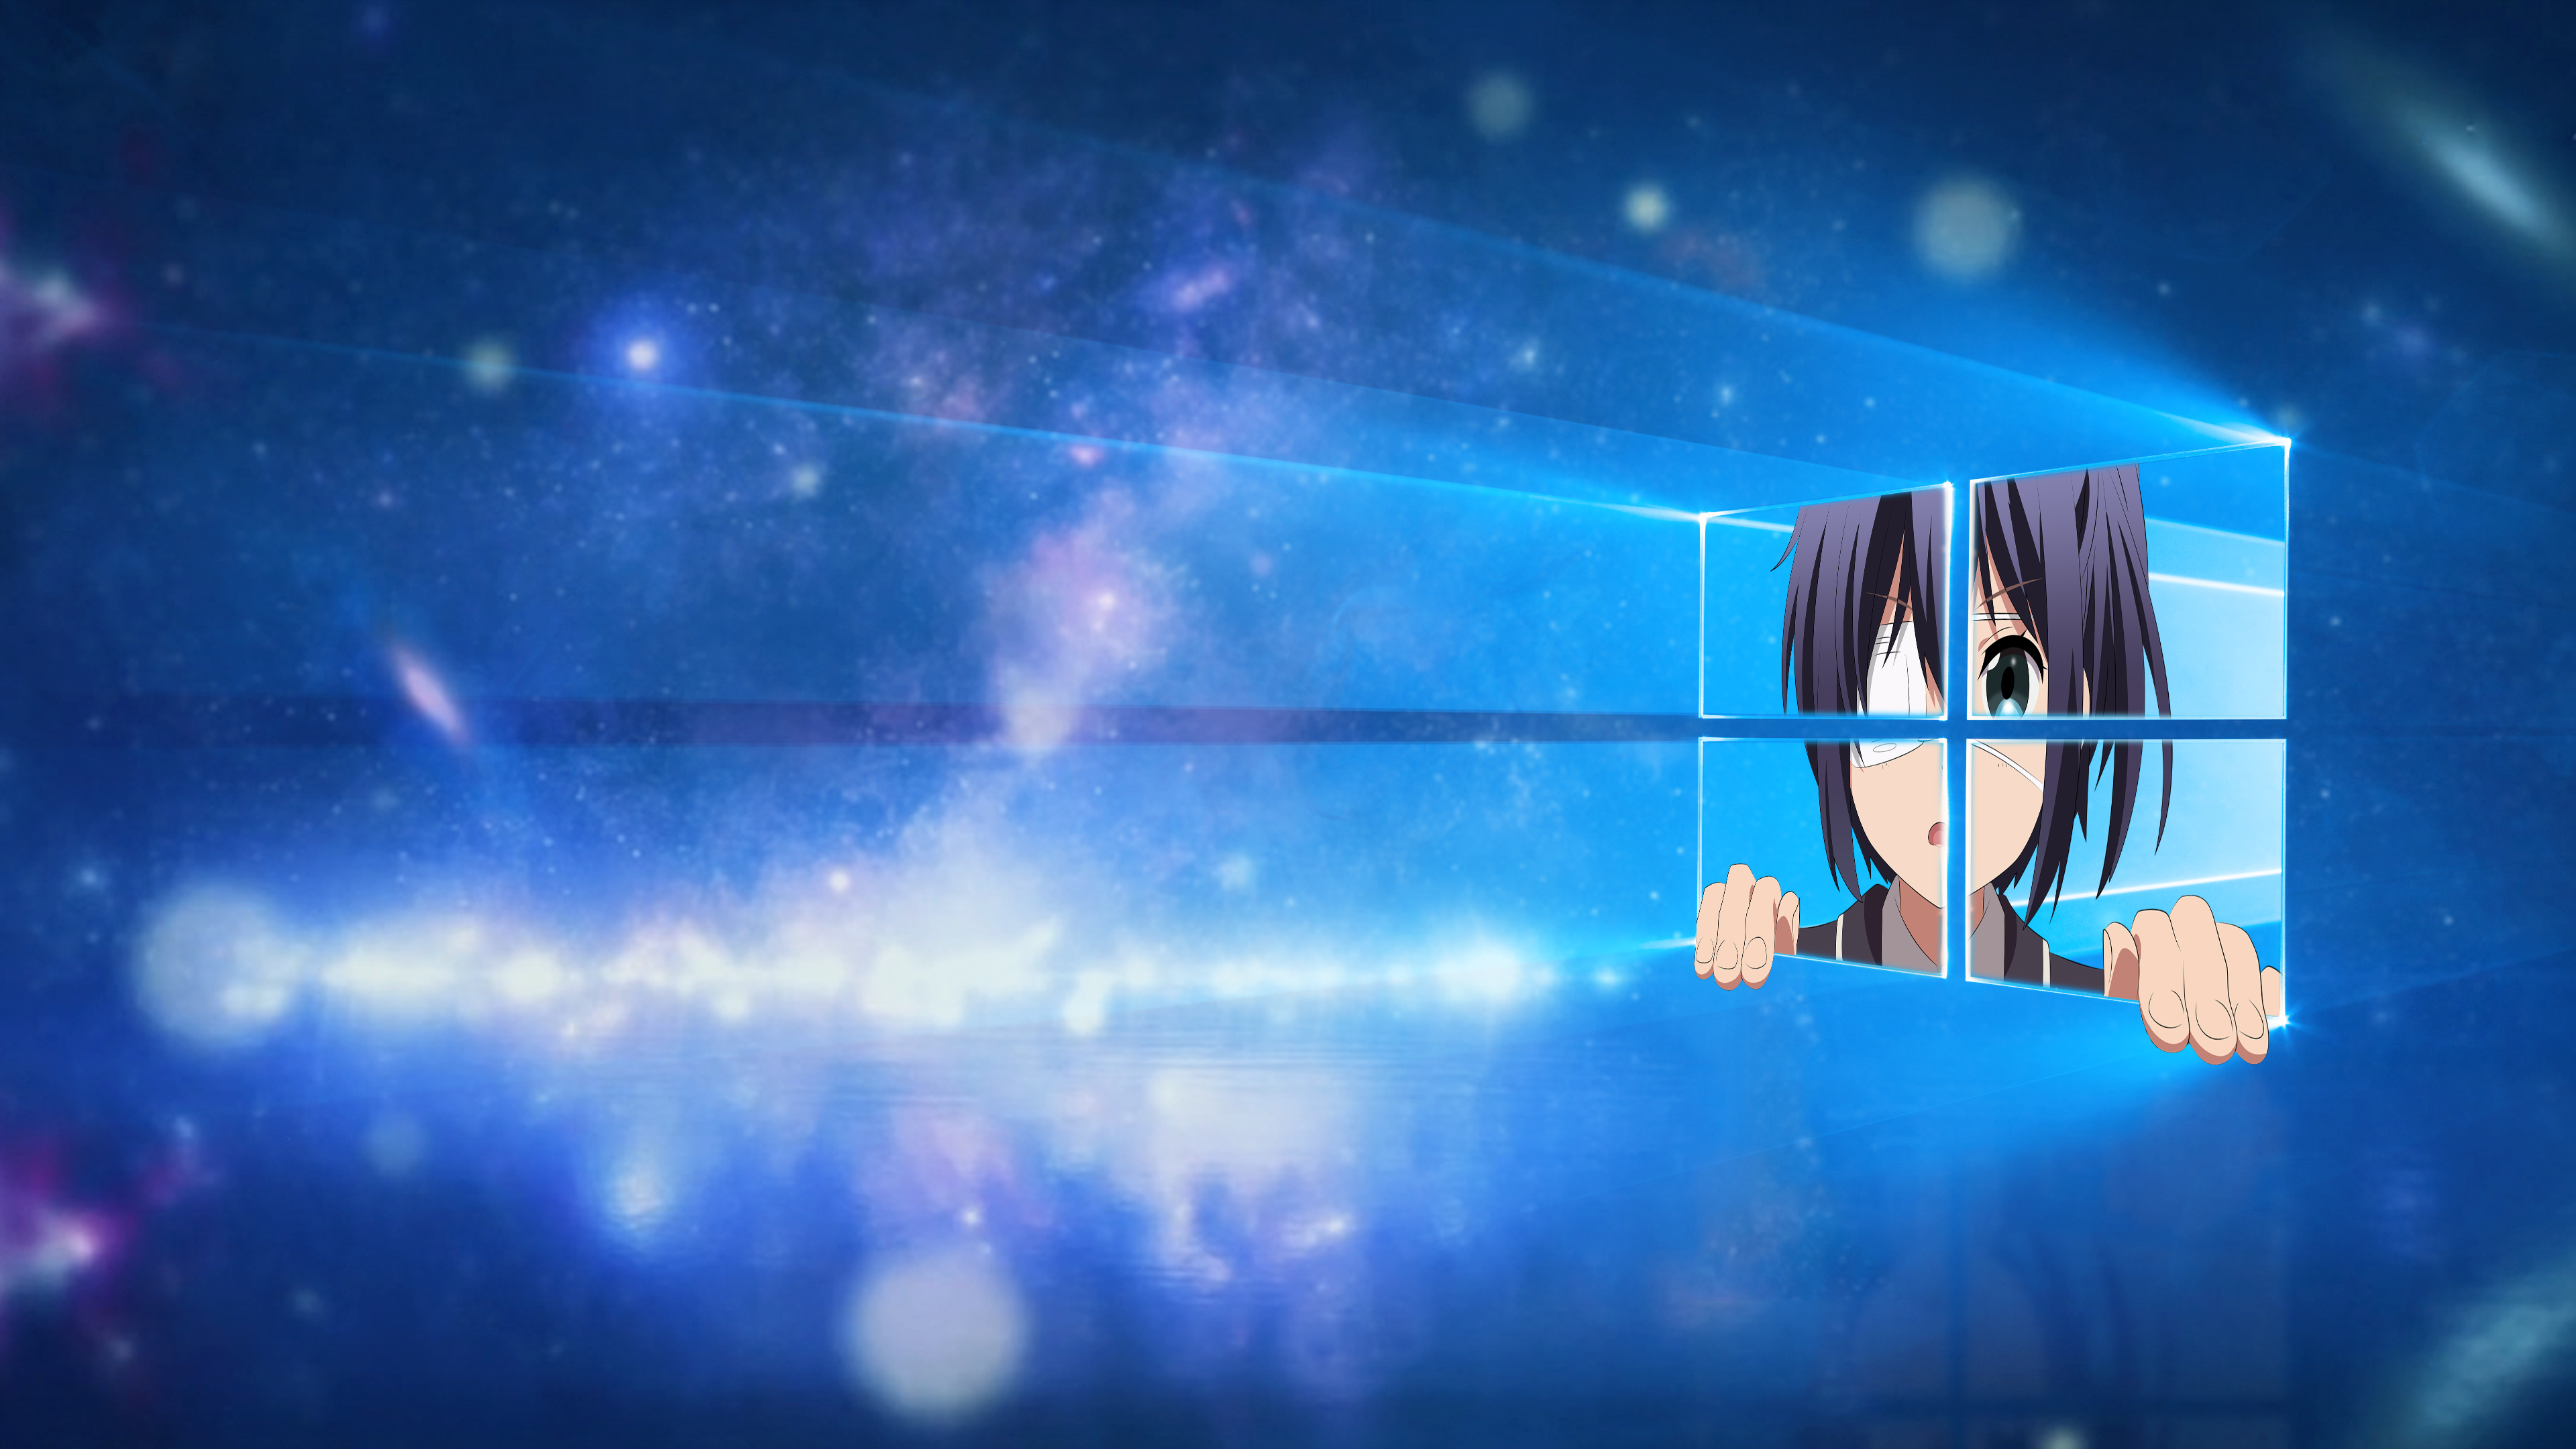 Windows HD Wallpaper Background Image